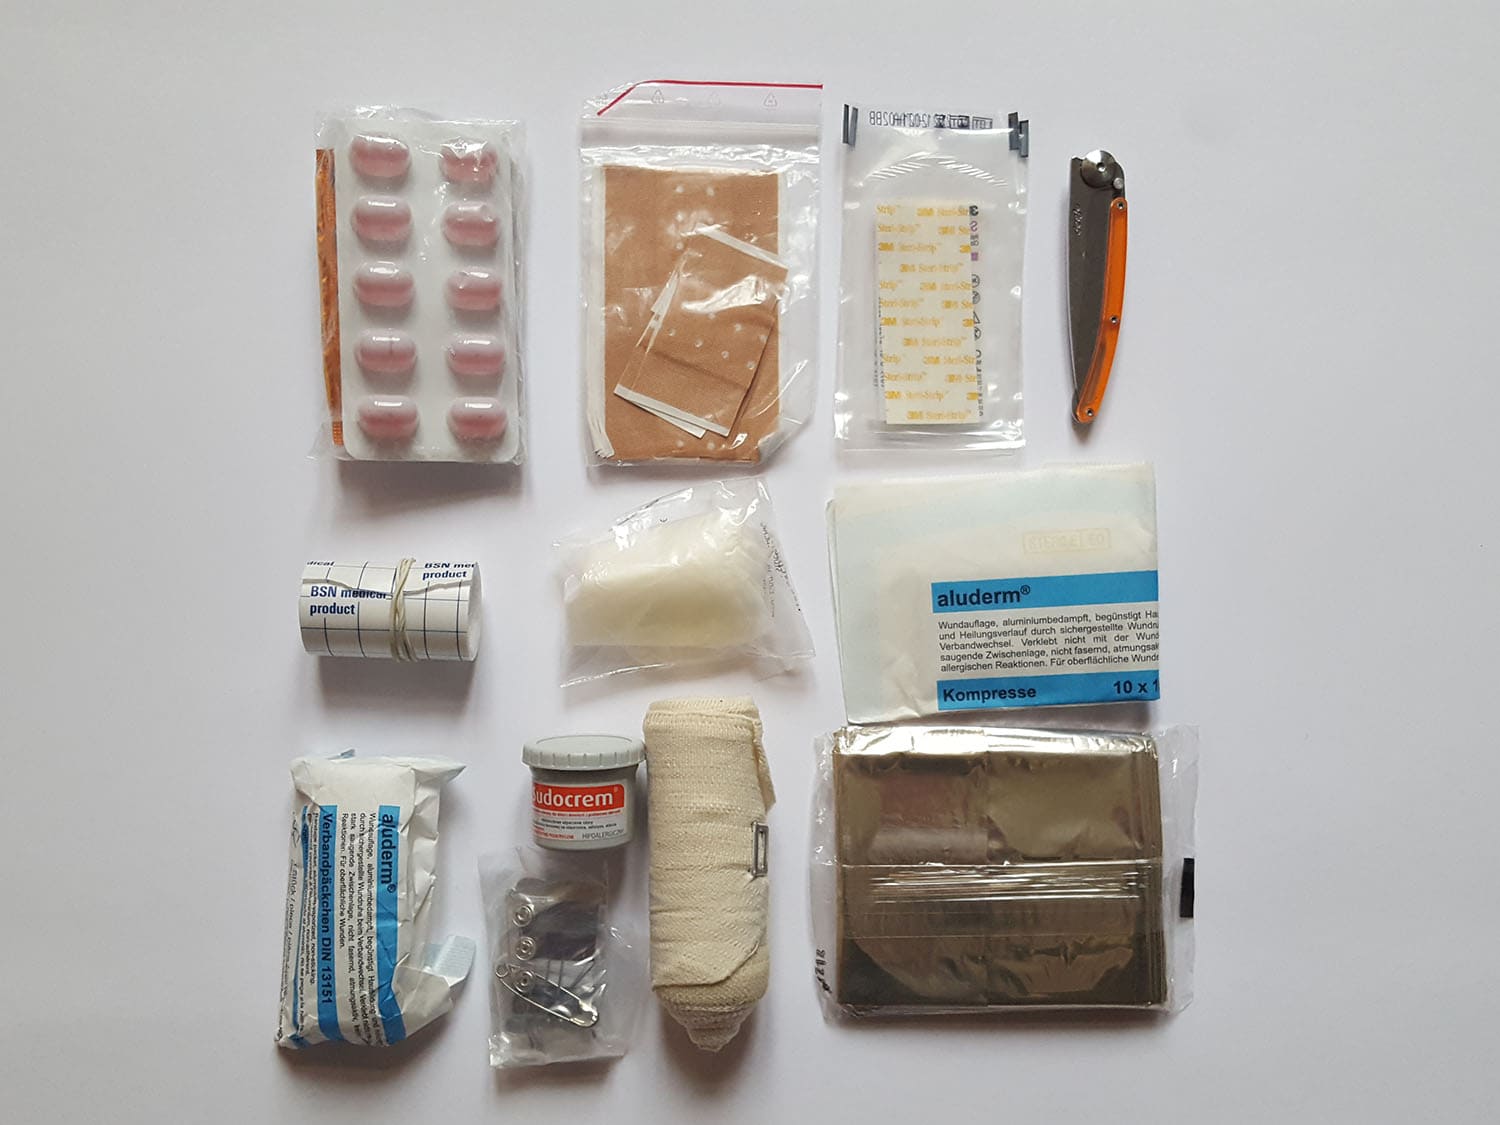 hiking first aid kit